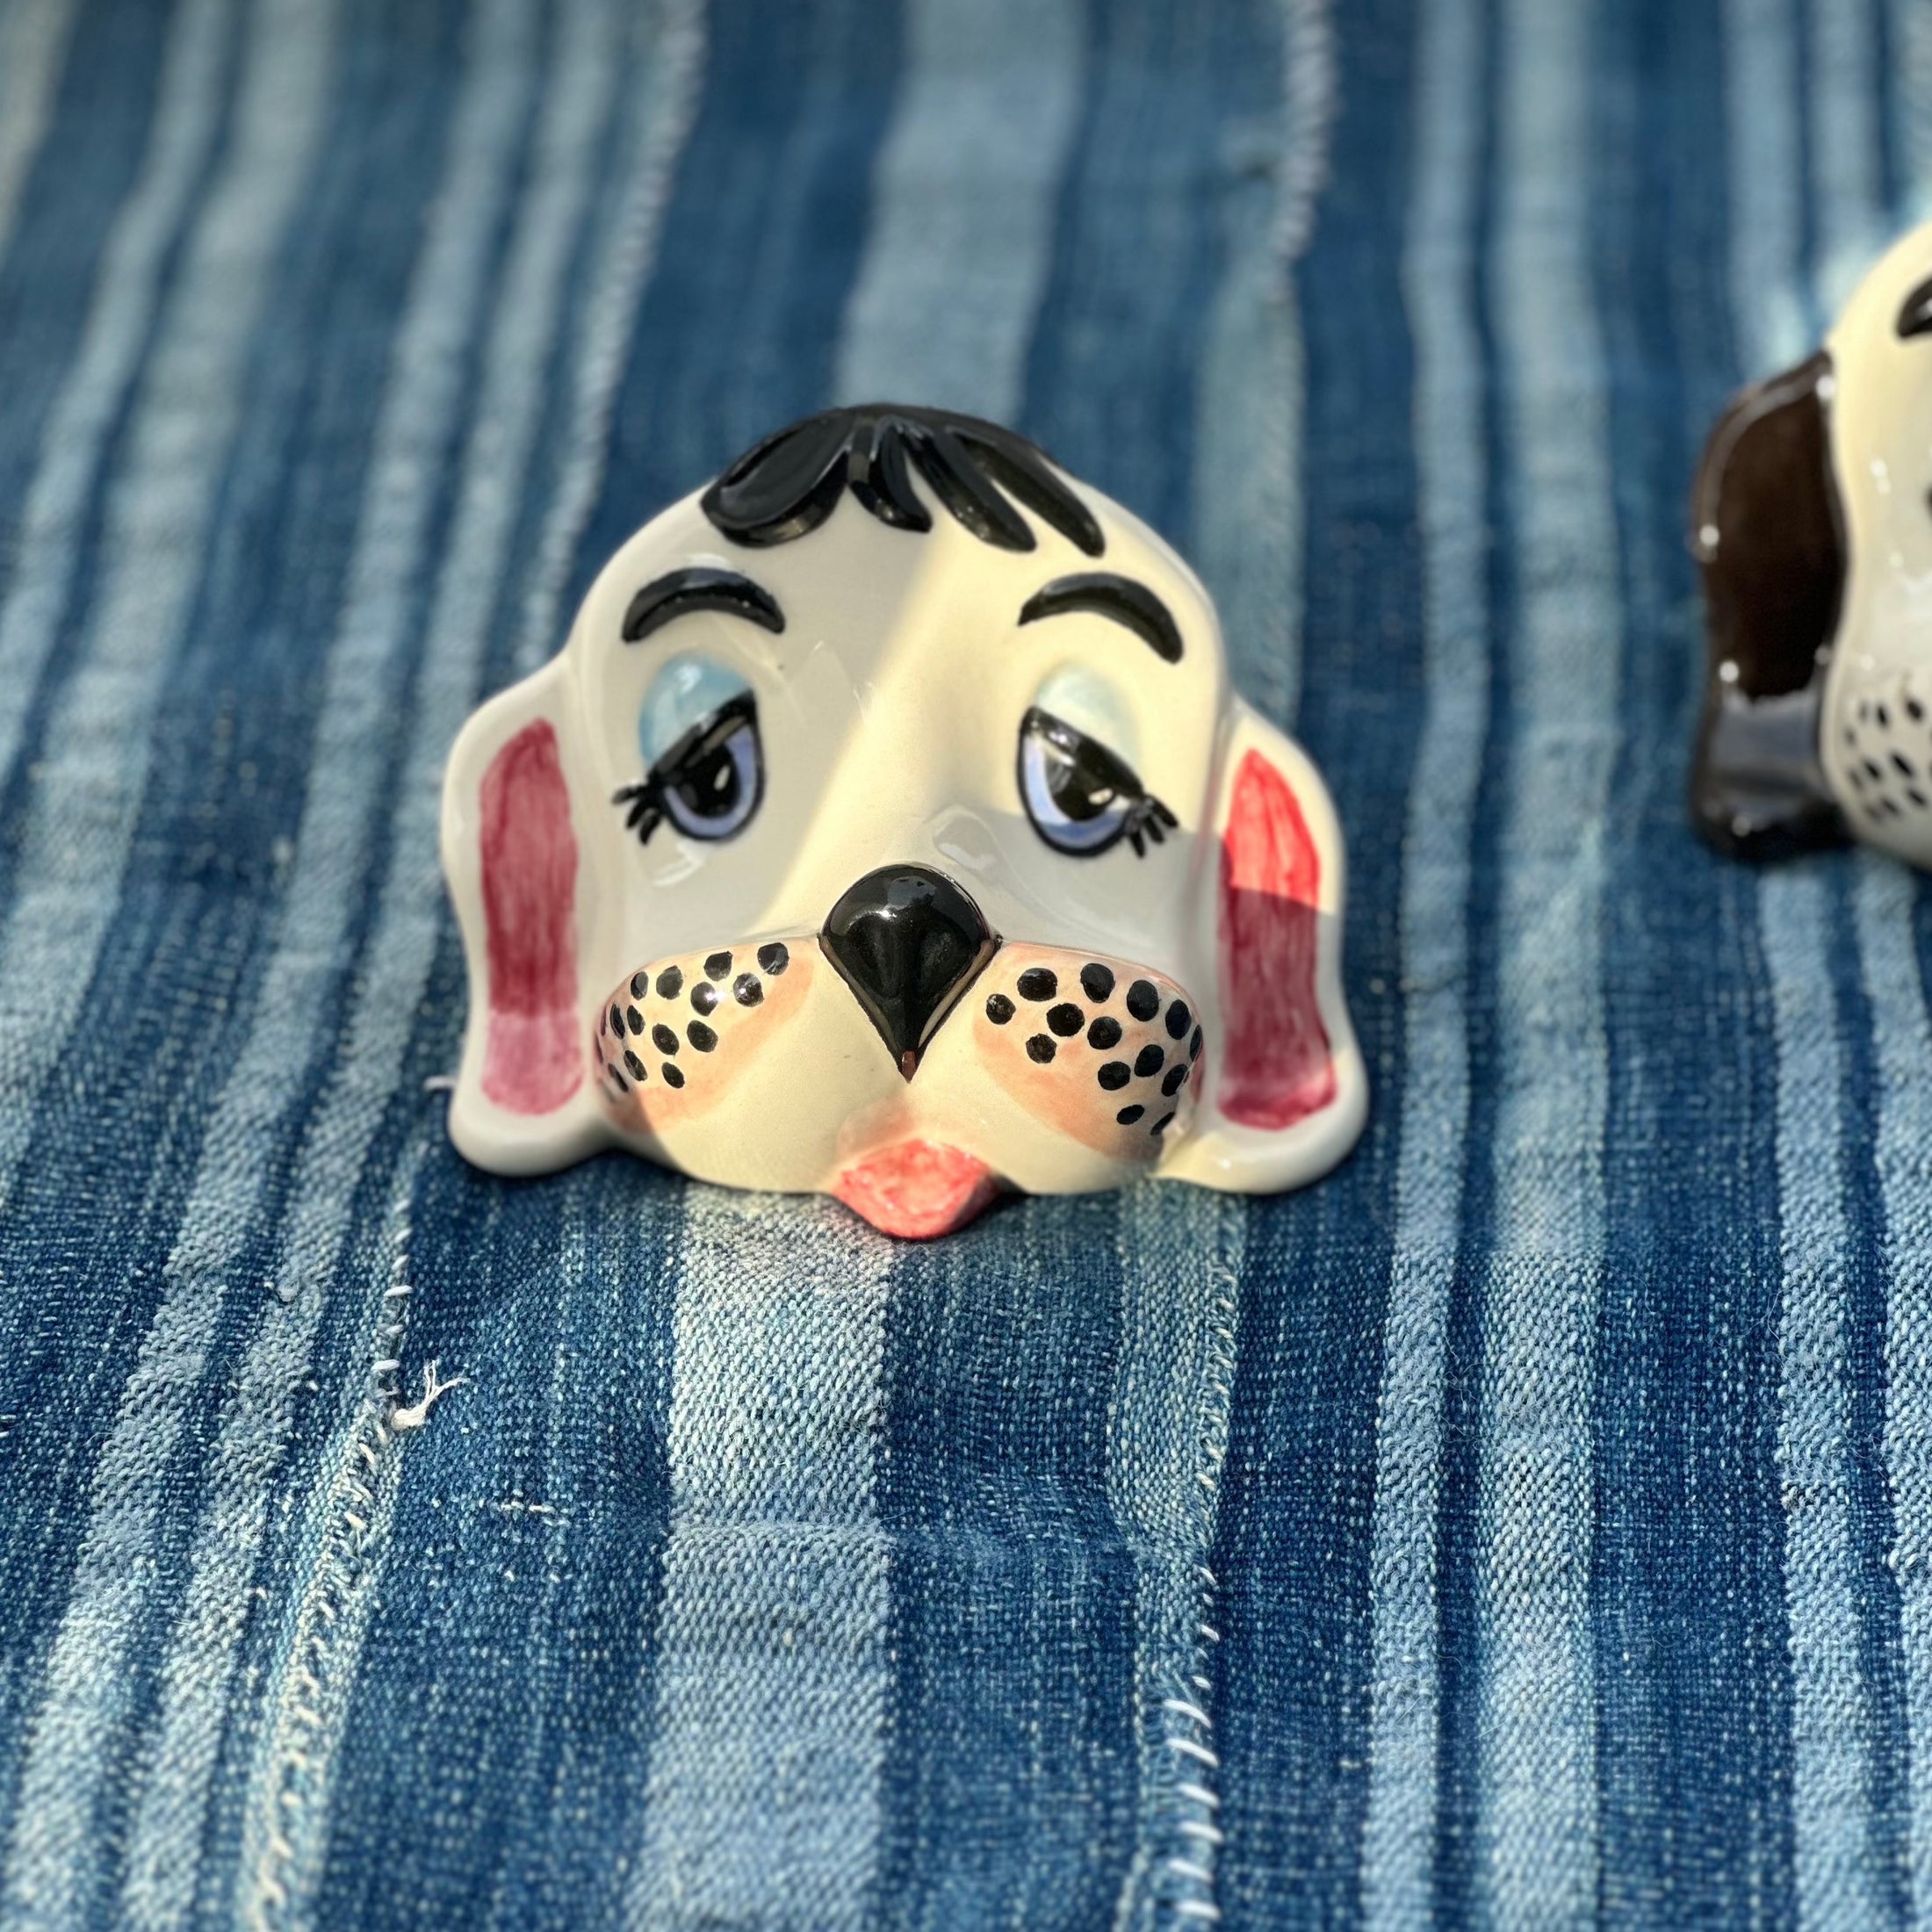 Cool Ceramic Doggie Sunglass Holders